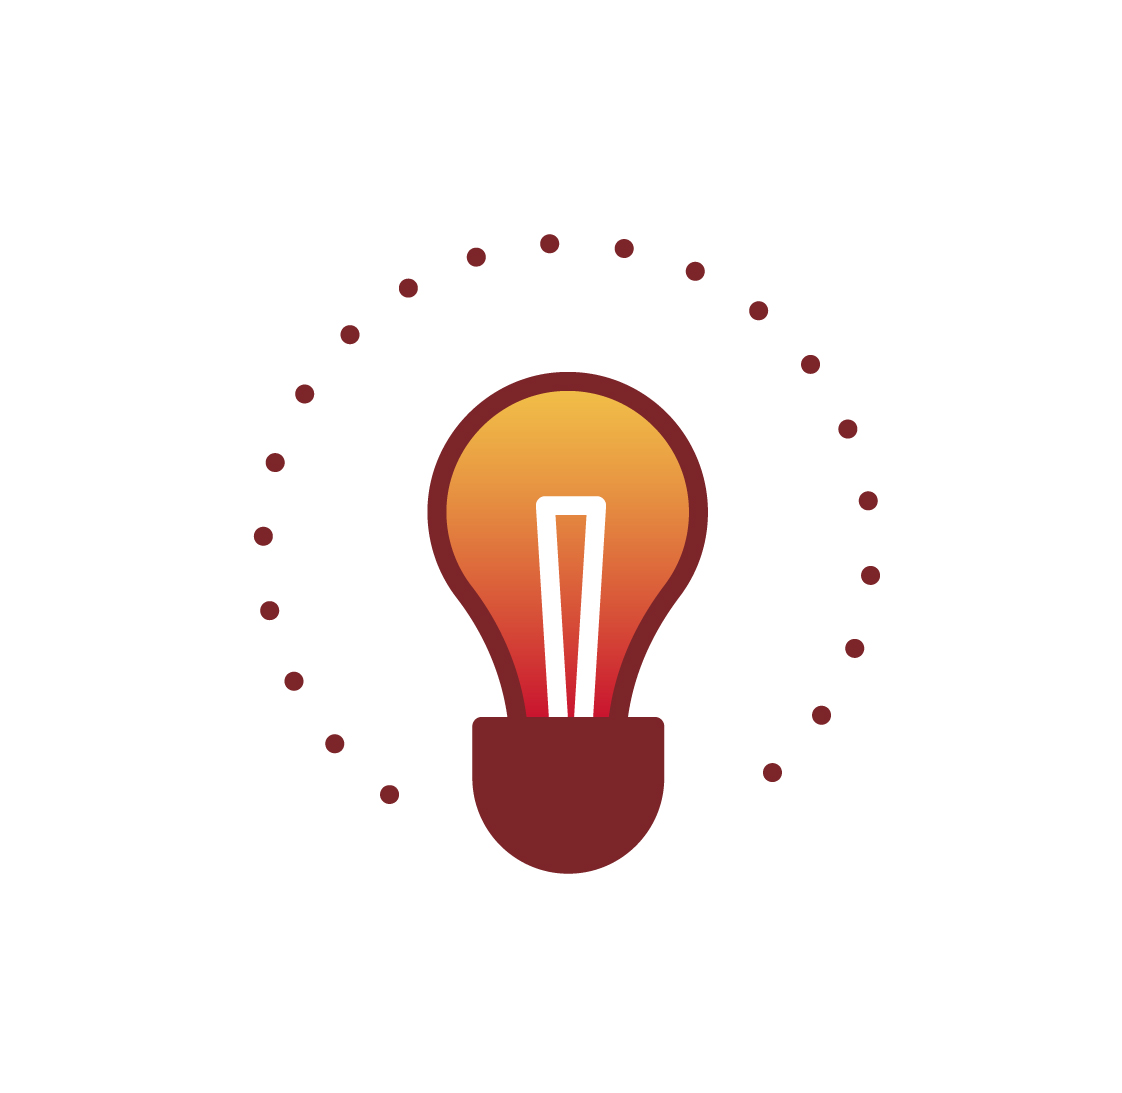 Illustrated icon of an illuminated light bulb